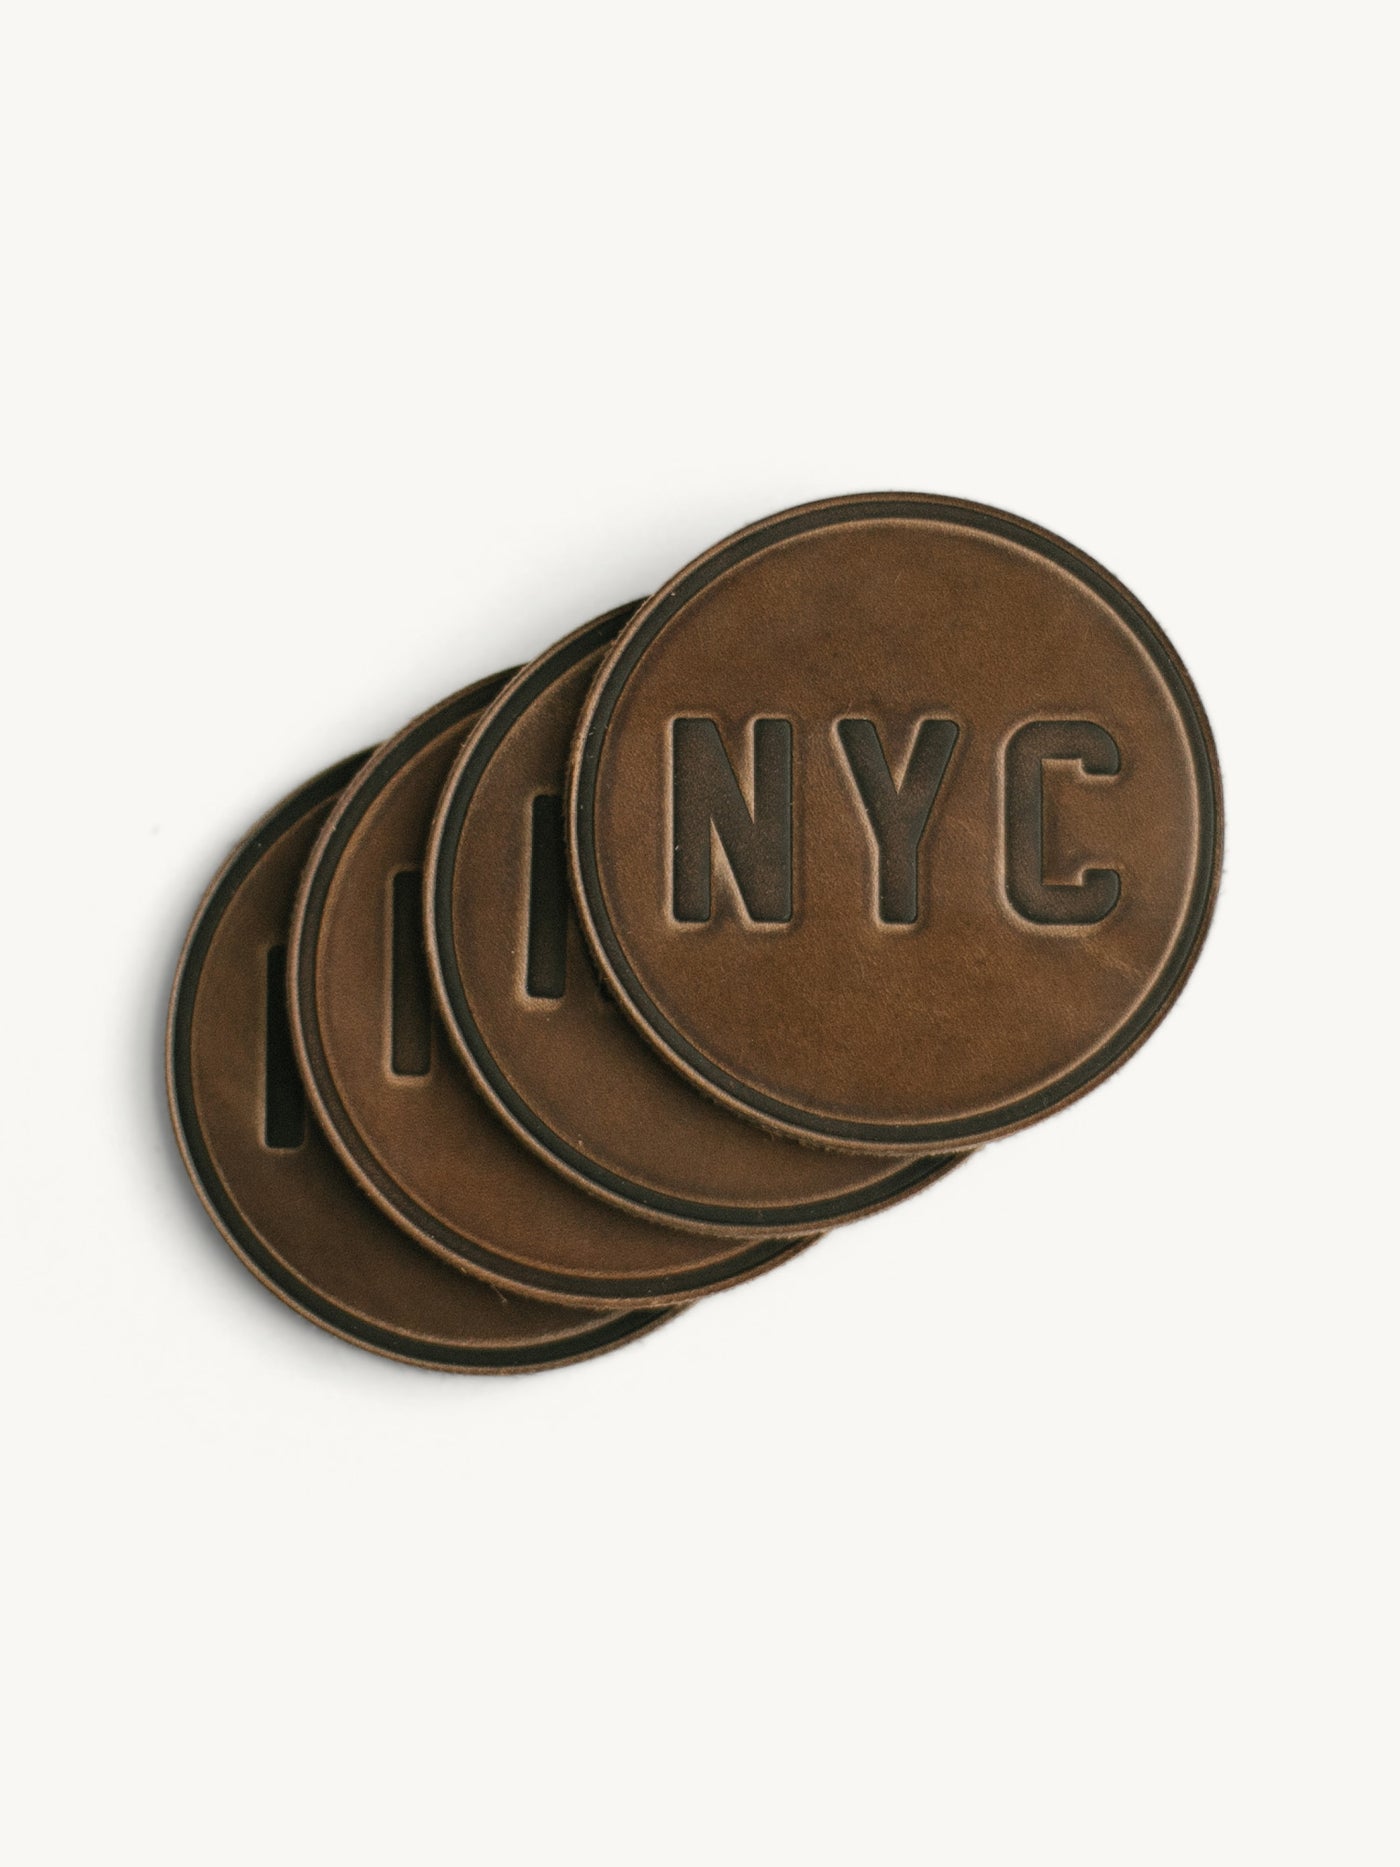 New York City Circle Coasters (NYC)